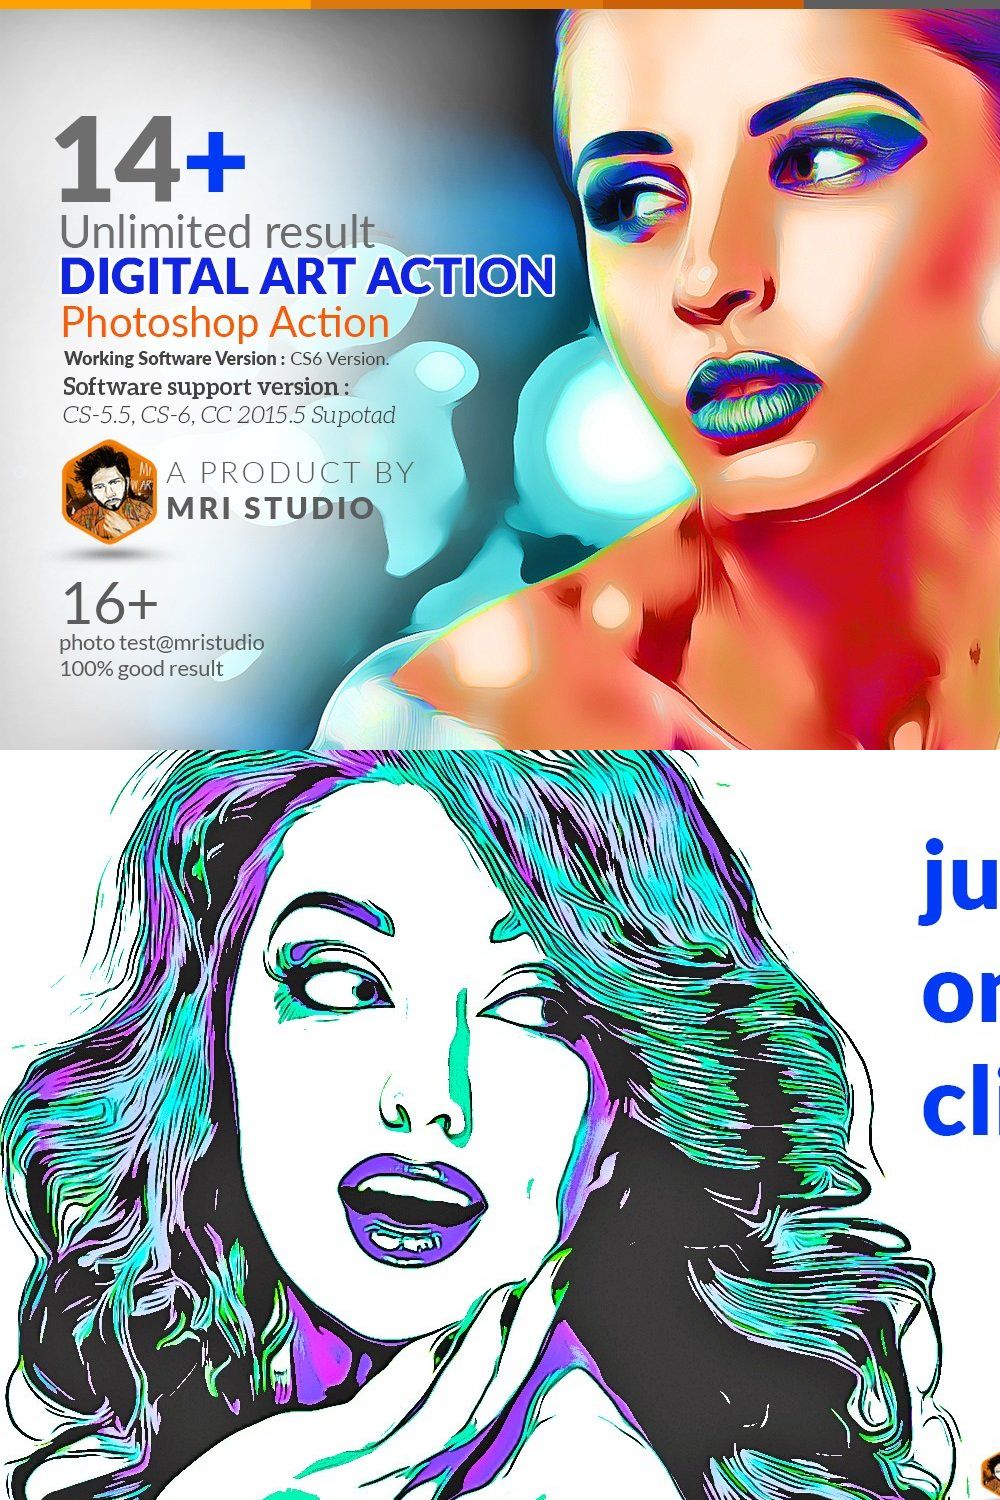 Digital Art Action pinterest preview image.